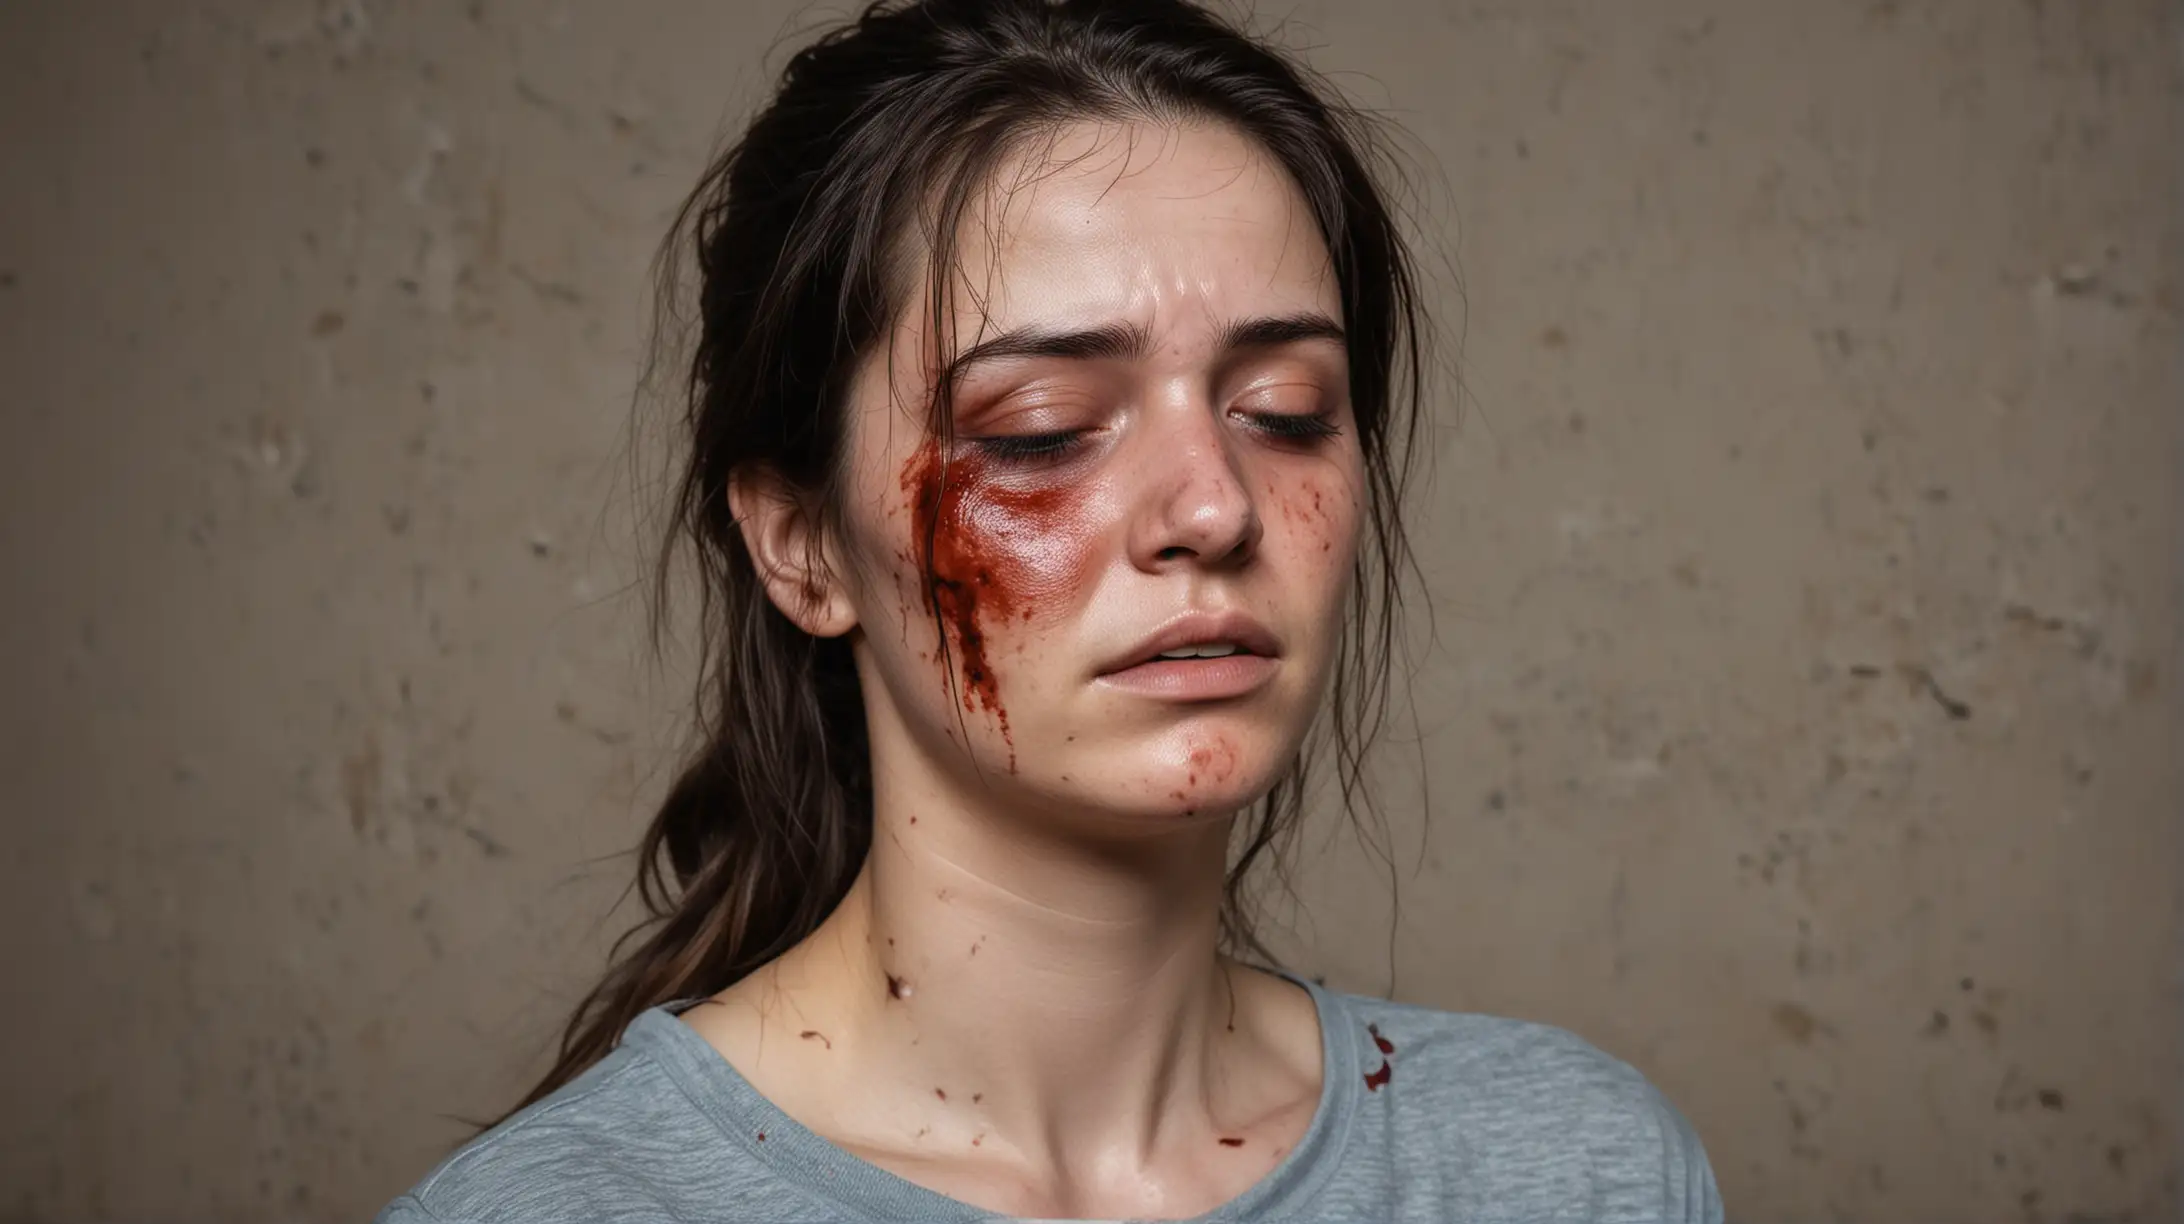 Portrait of a Woman with Facial Bruises Survivor of Domestic Violence